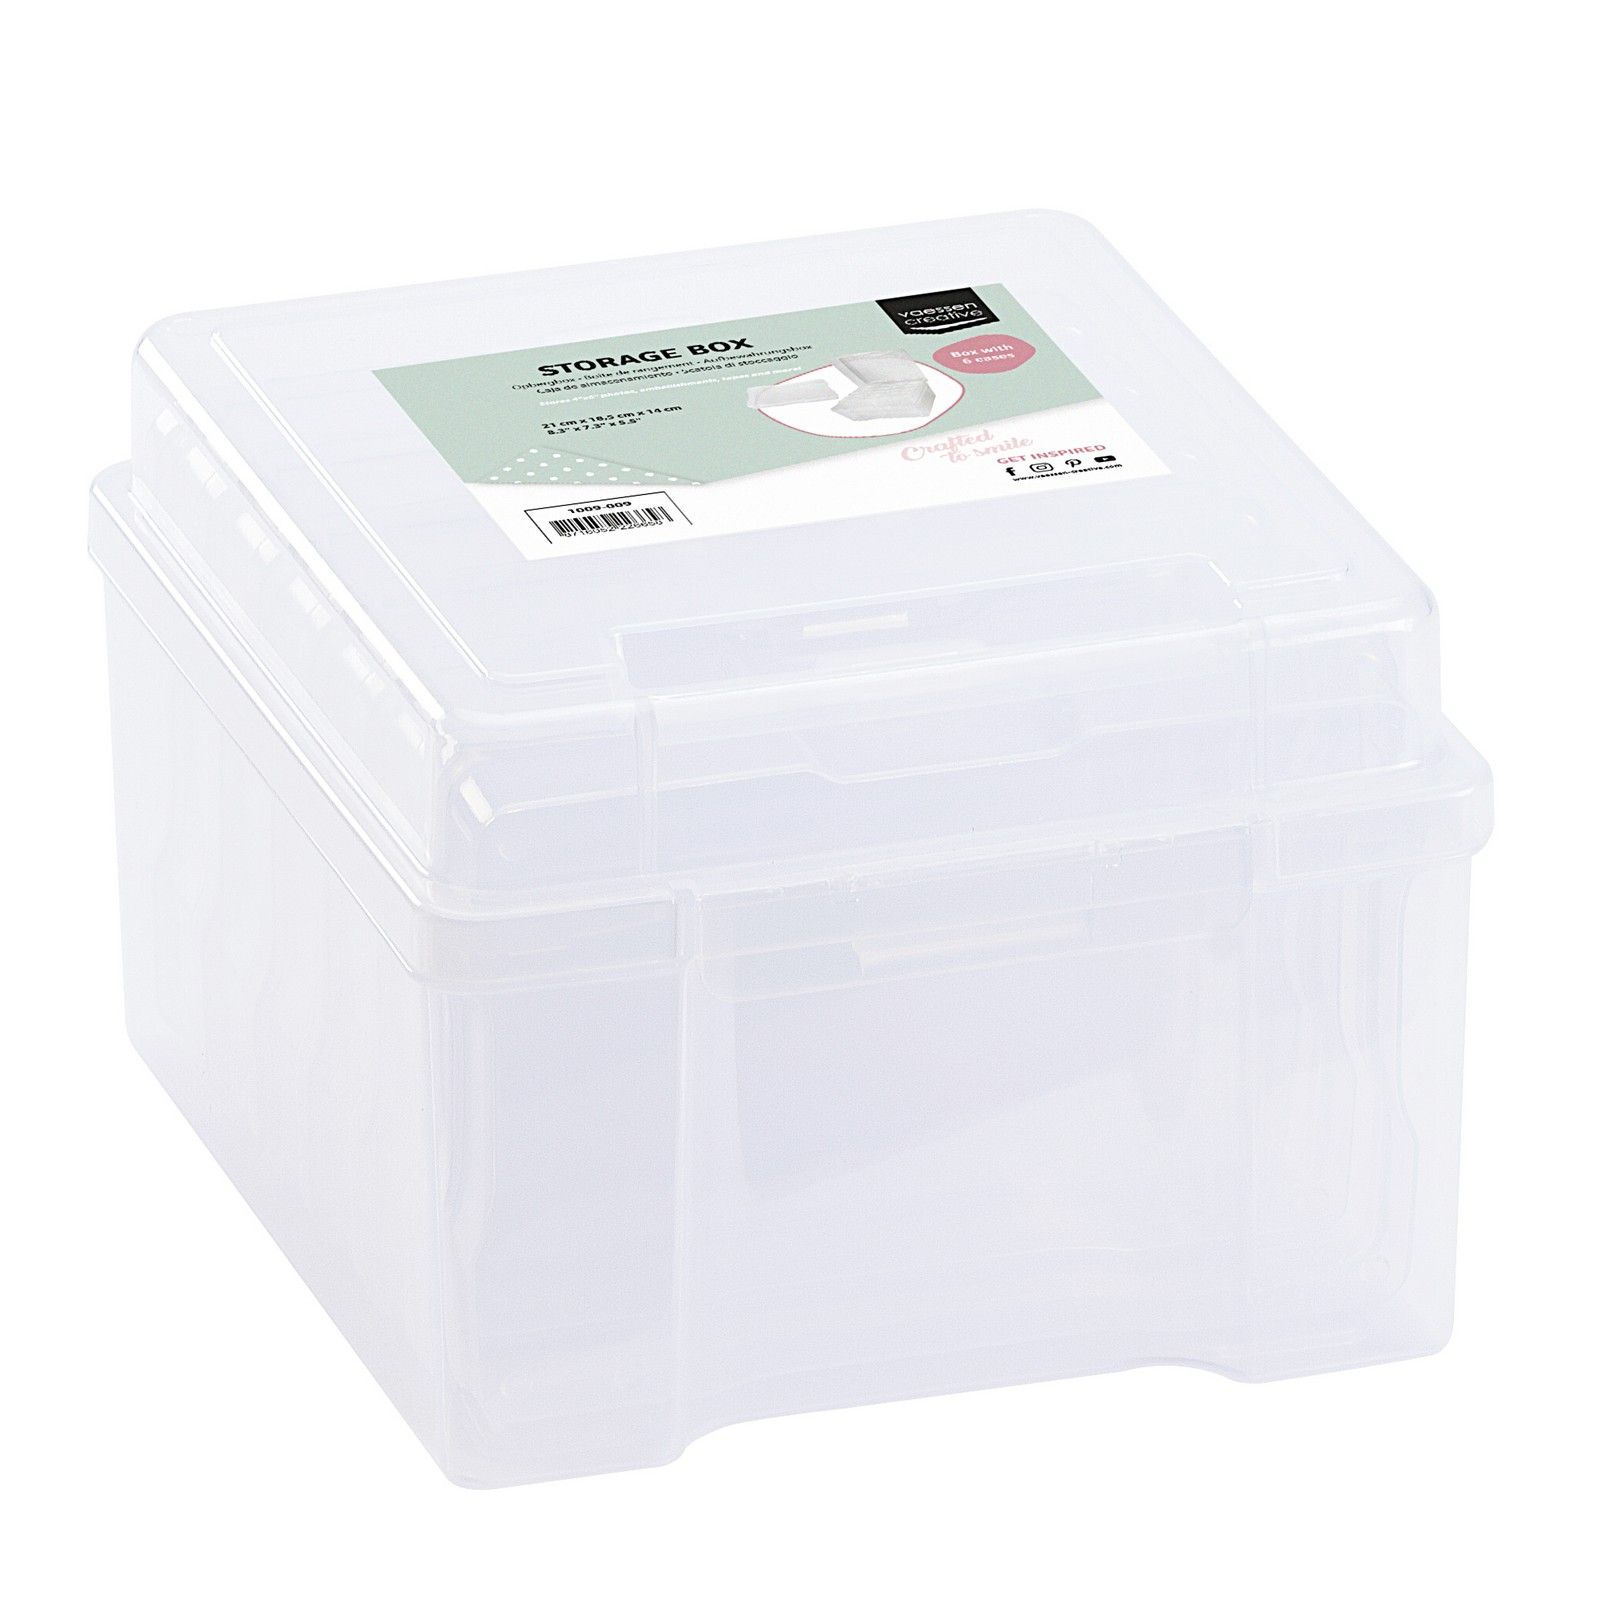 Vaessen Creative • Storage Box with 6 Cases